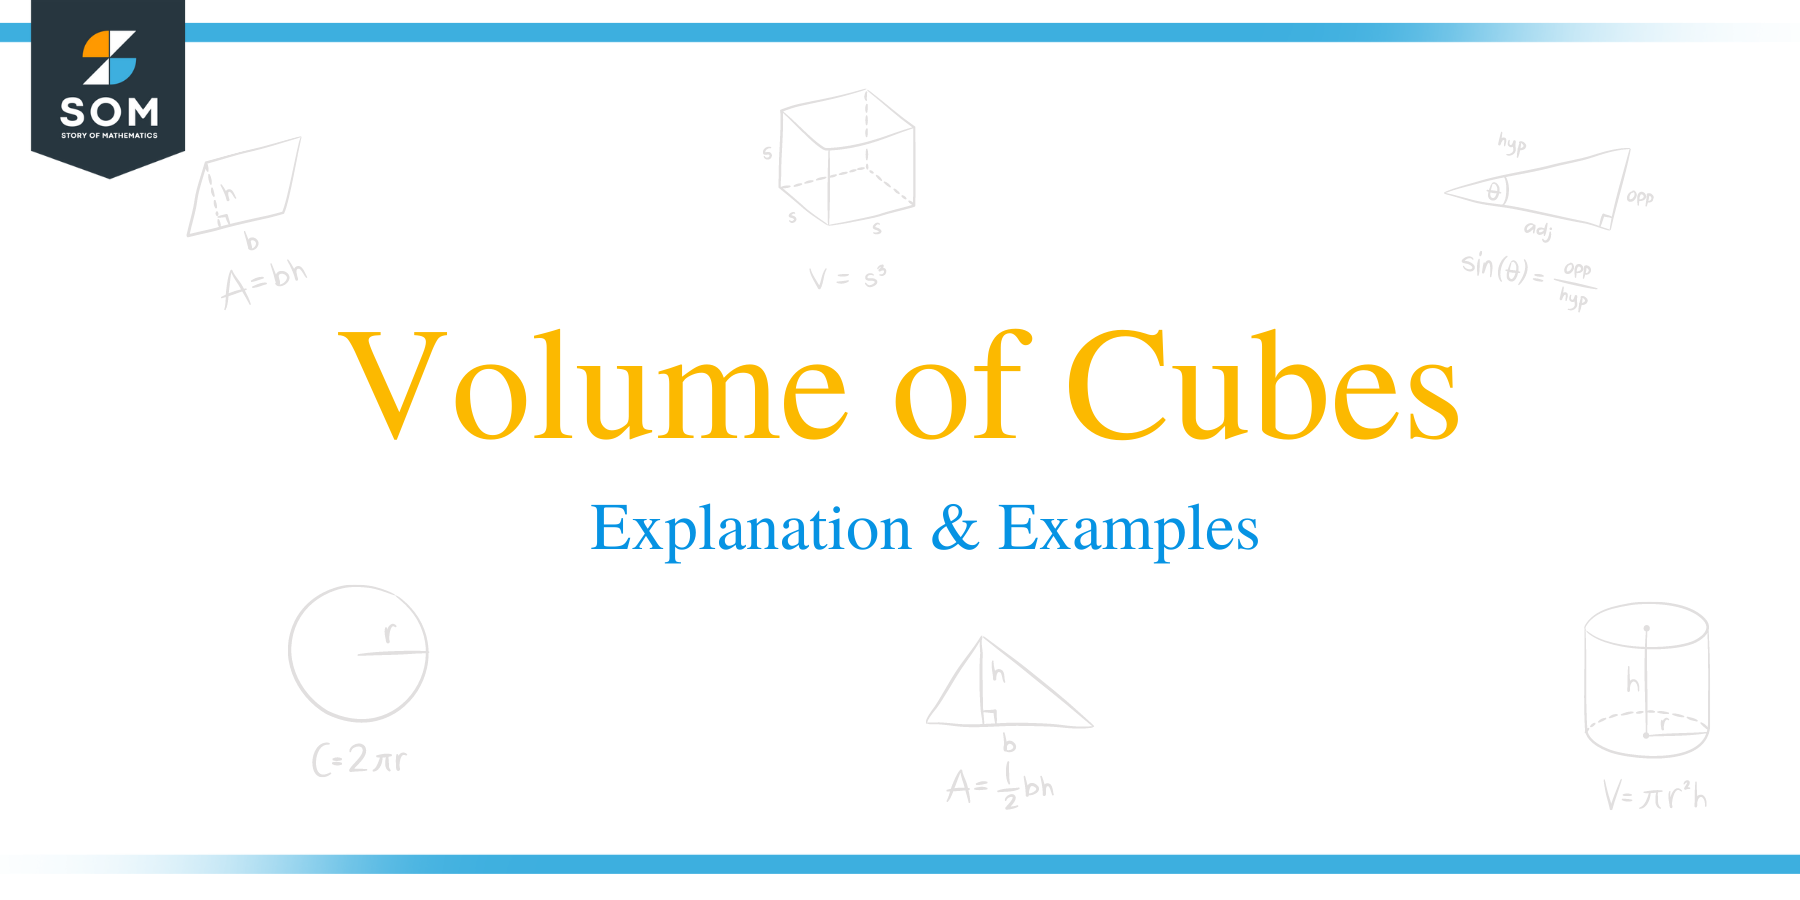 Volume of Cubes